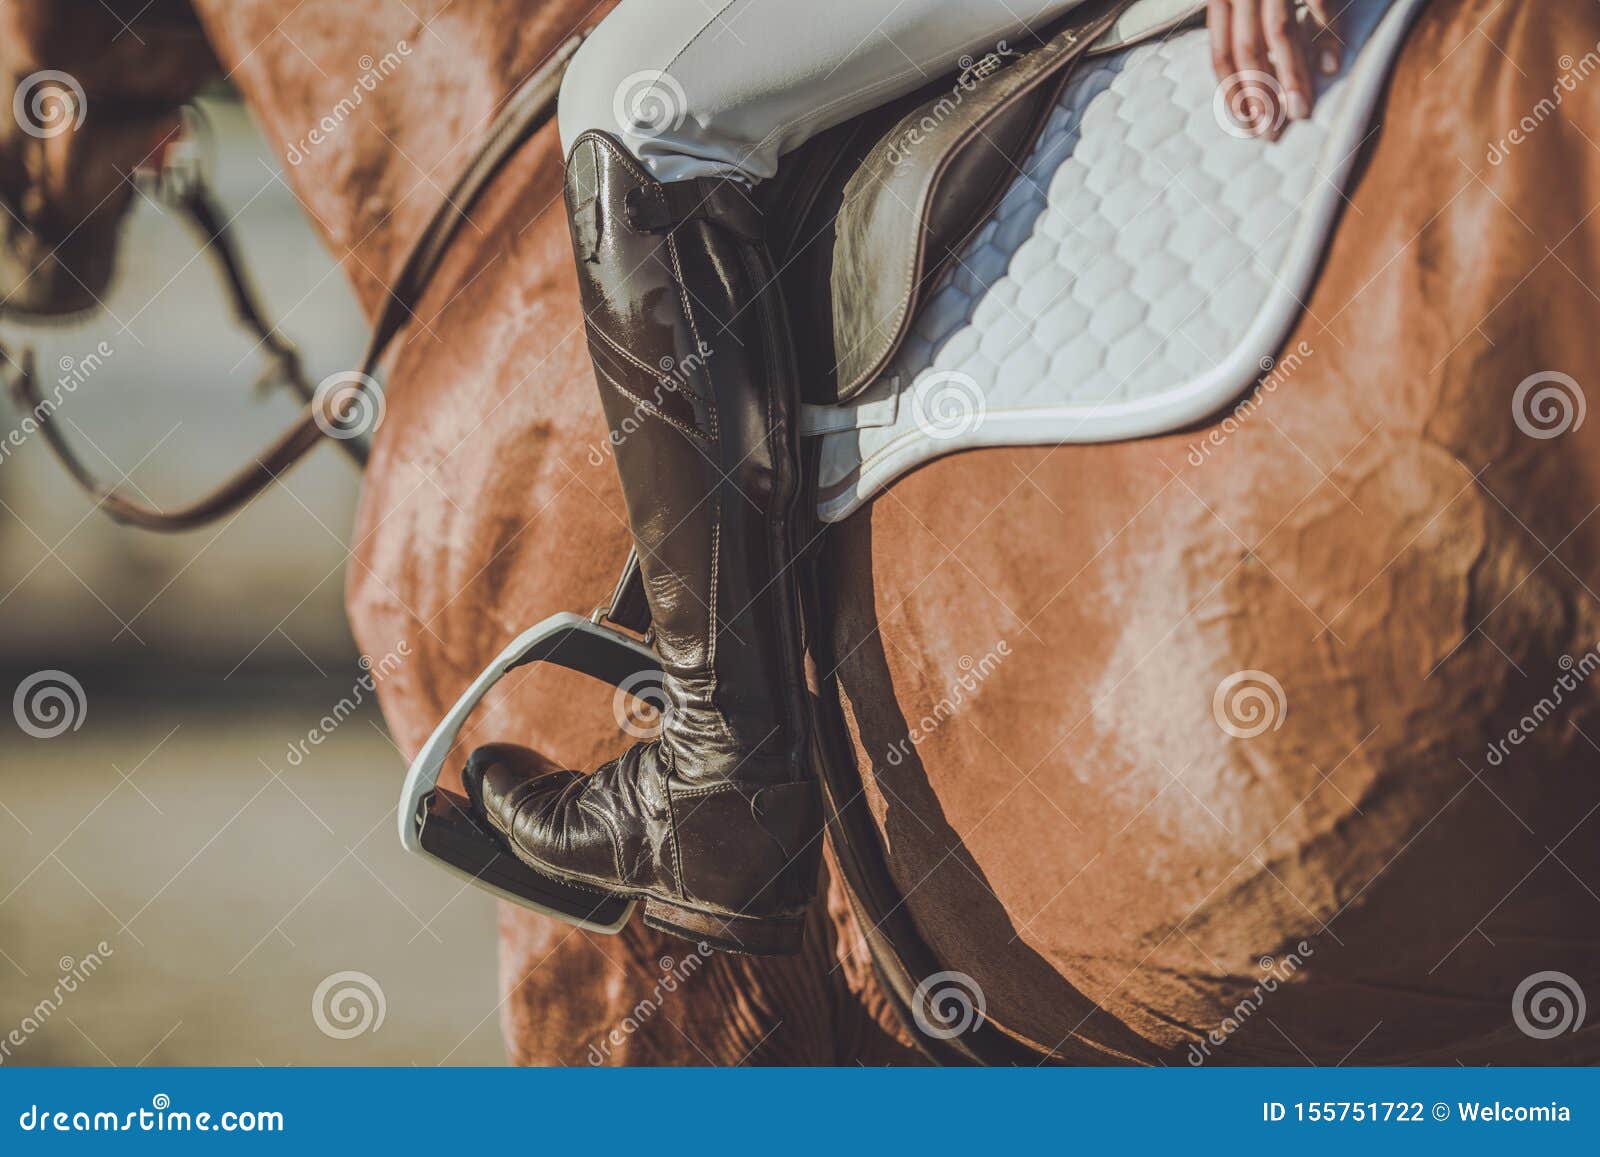 horse riding stirrups